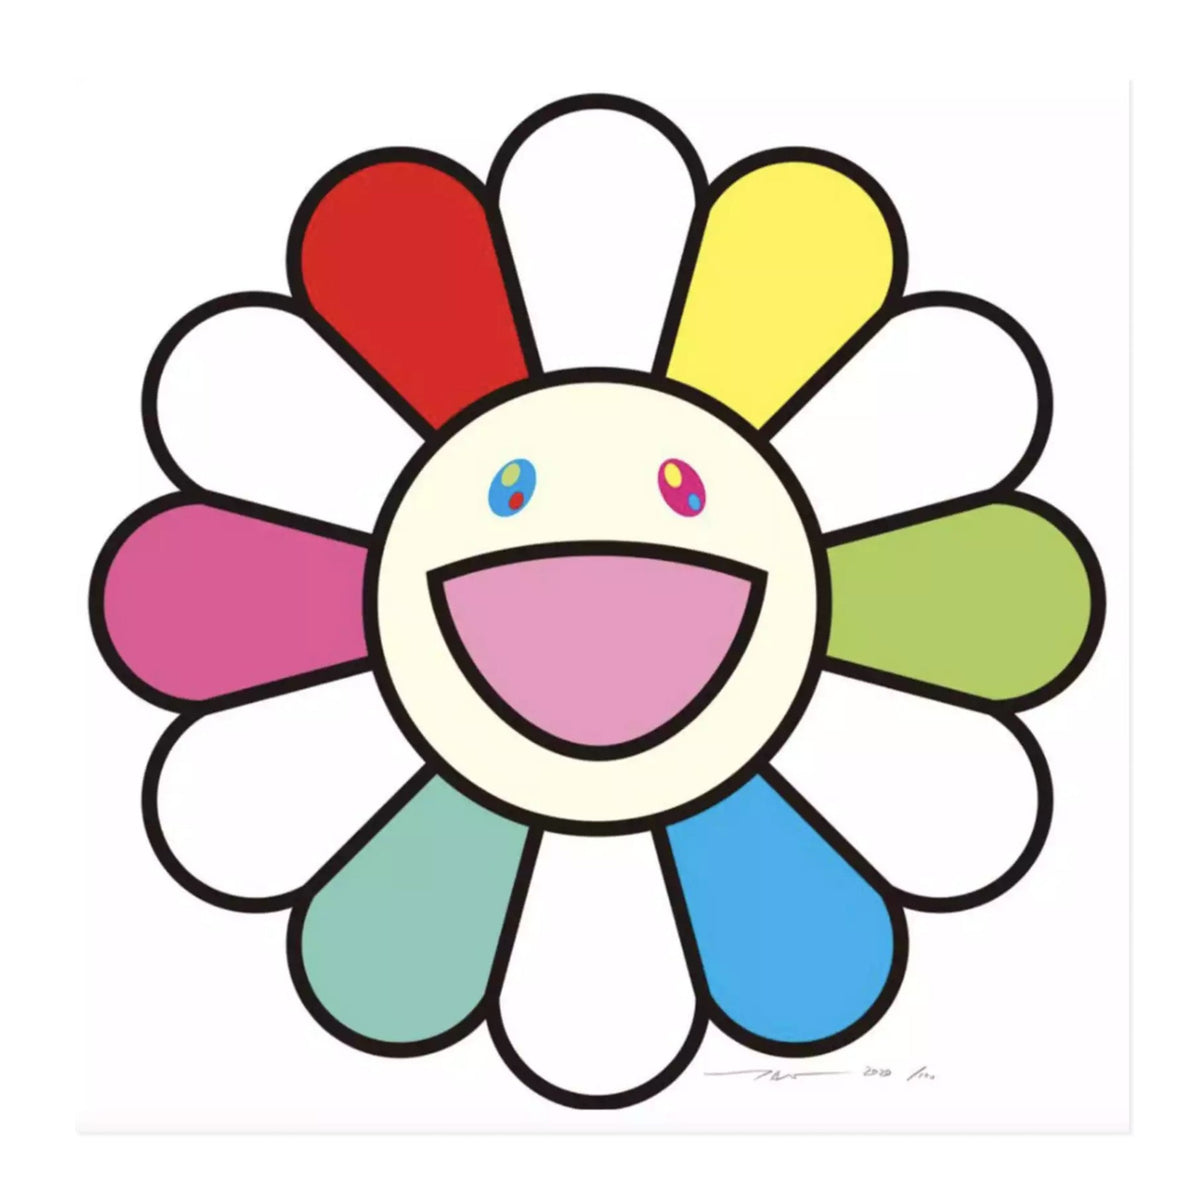 Takashi Murakami Flower Posters for Sale